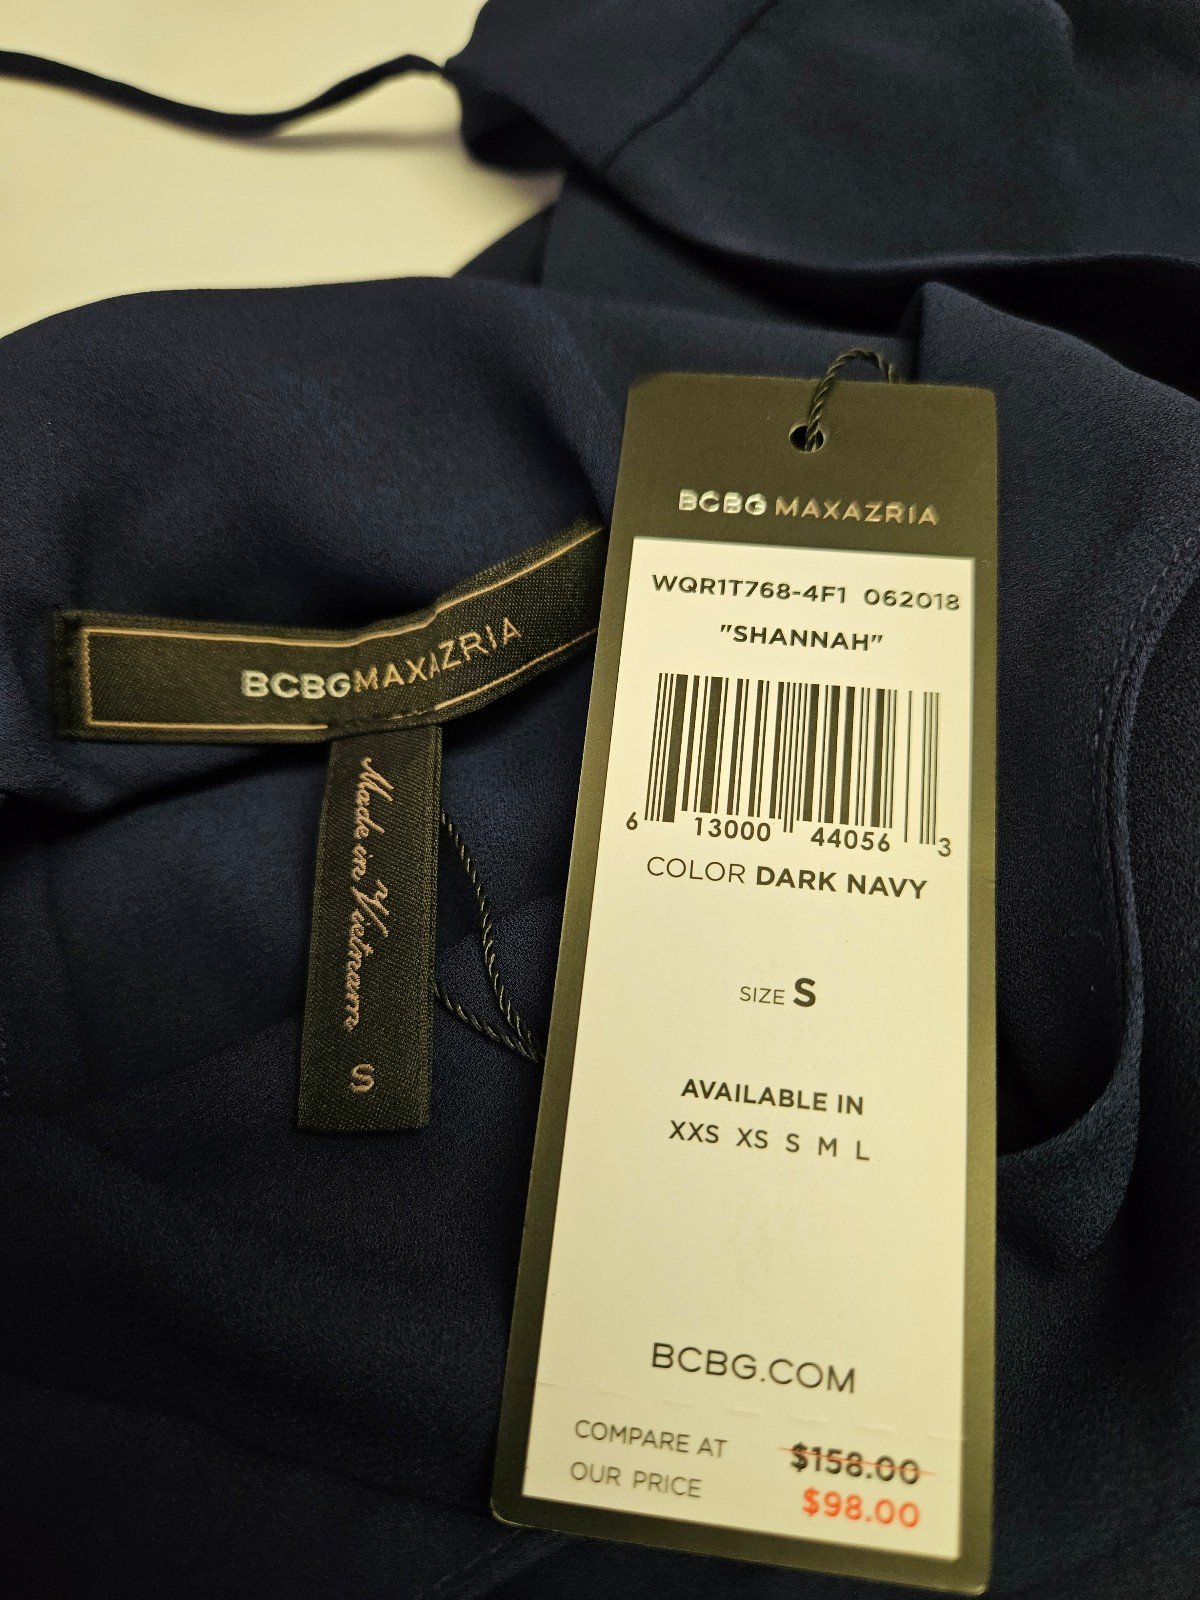 Amazing NWT BCBG Maxazria Shannah blouse GKo0fV7F1 Factory Price